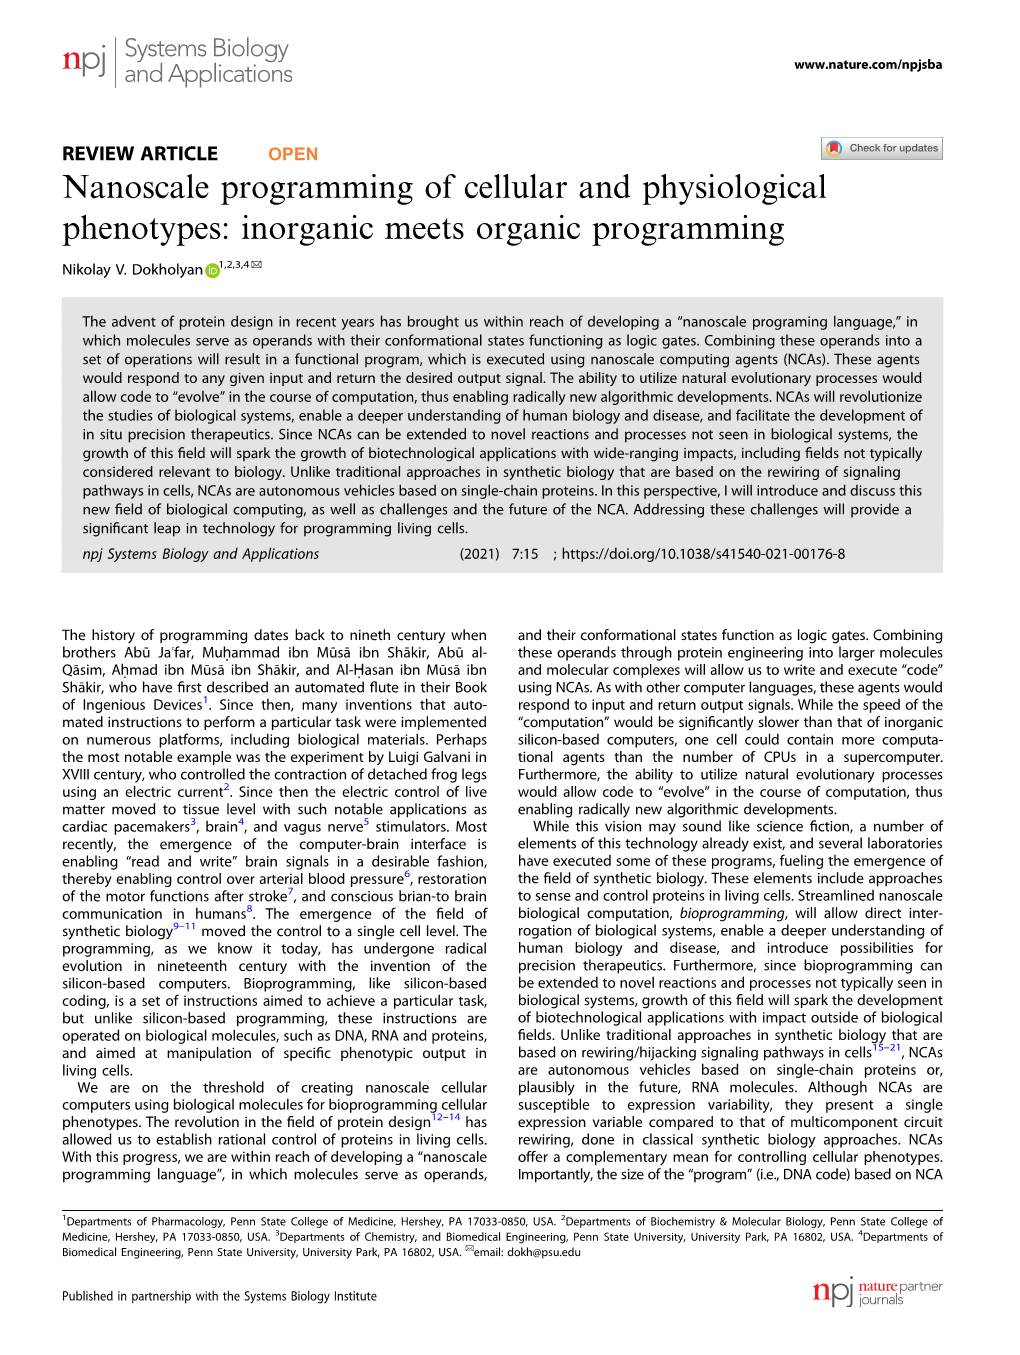 Nanoscale Programming of Cellular and Physiological Phenotypes: Inorganic Meets Organic Programming ✉ Nikolay V